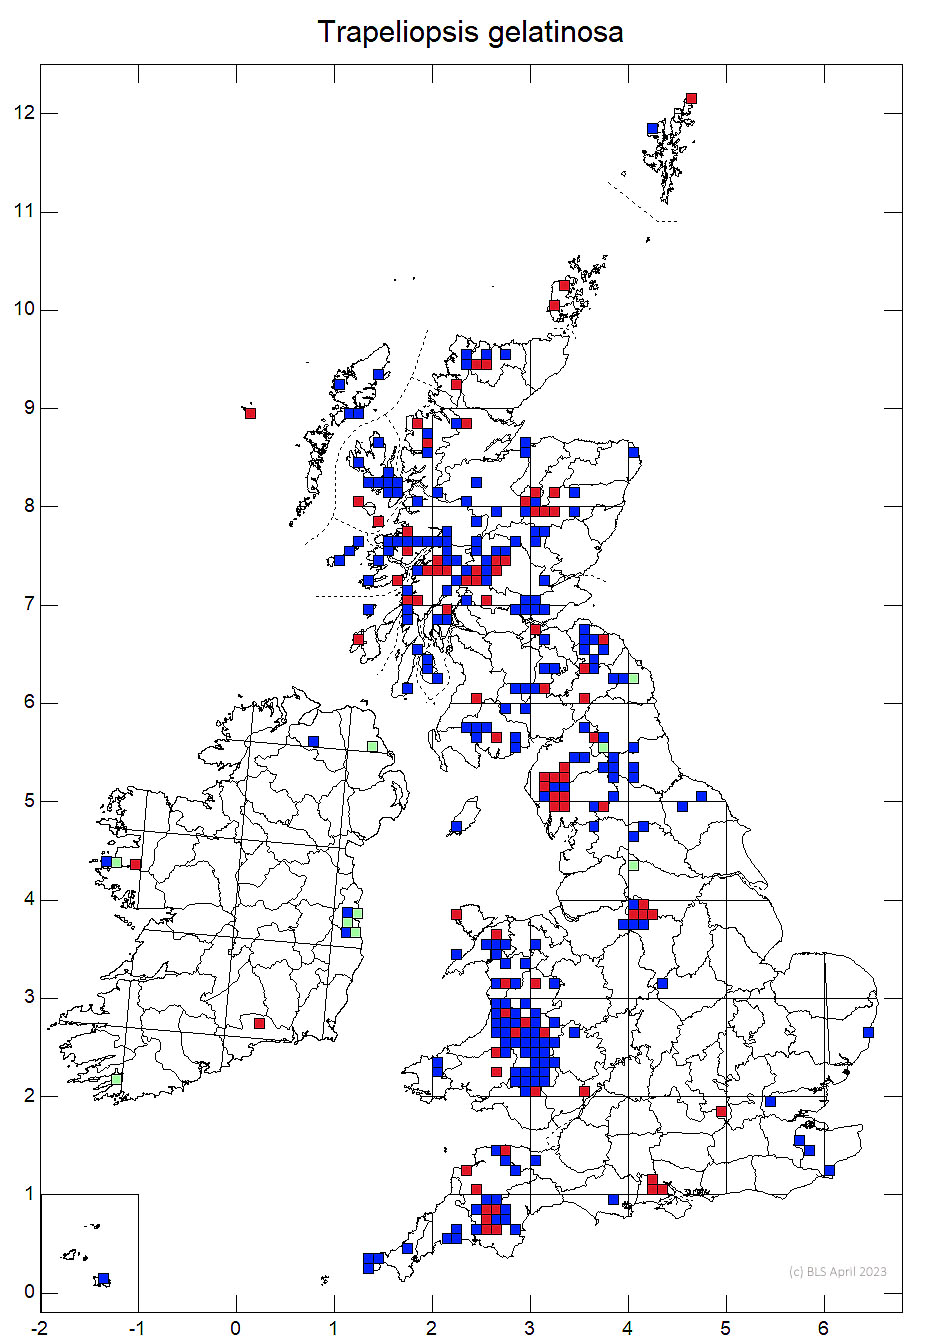 Trapeliopsis gelatinosa 10km sq distribution map